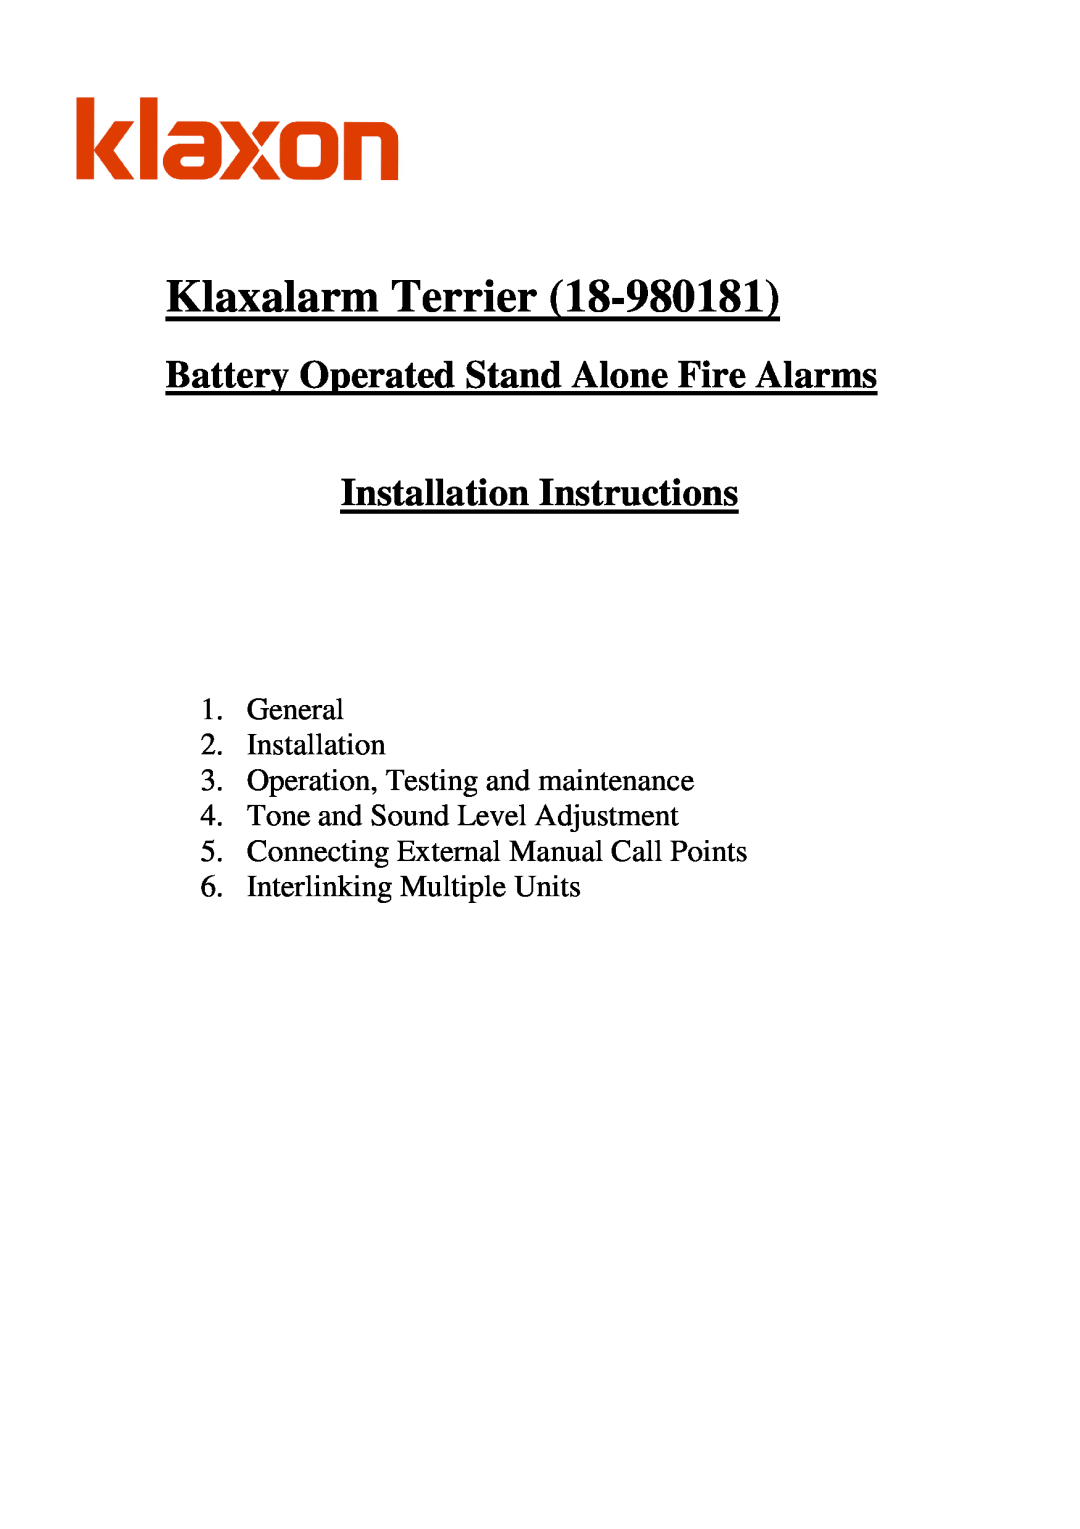 Klaxon 18-980181 installation instructions General 2. Installation 3. Operation, Testing and maintenance 